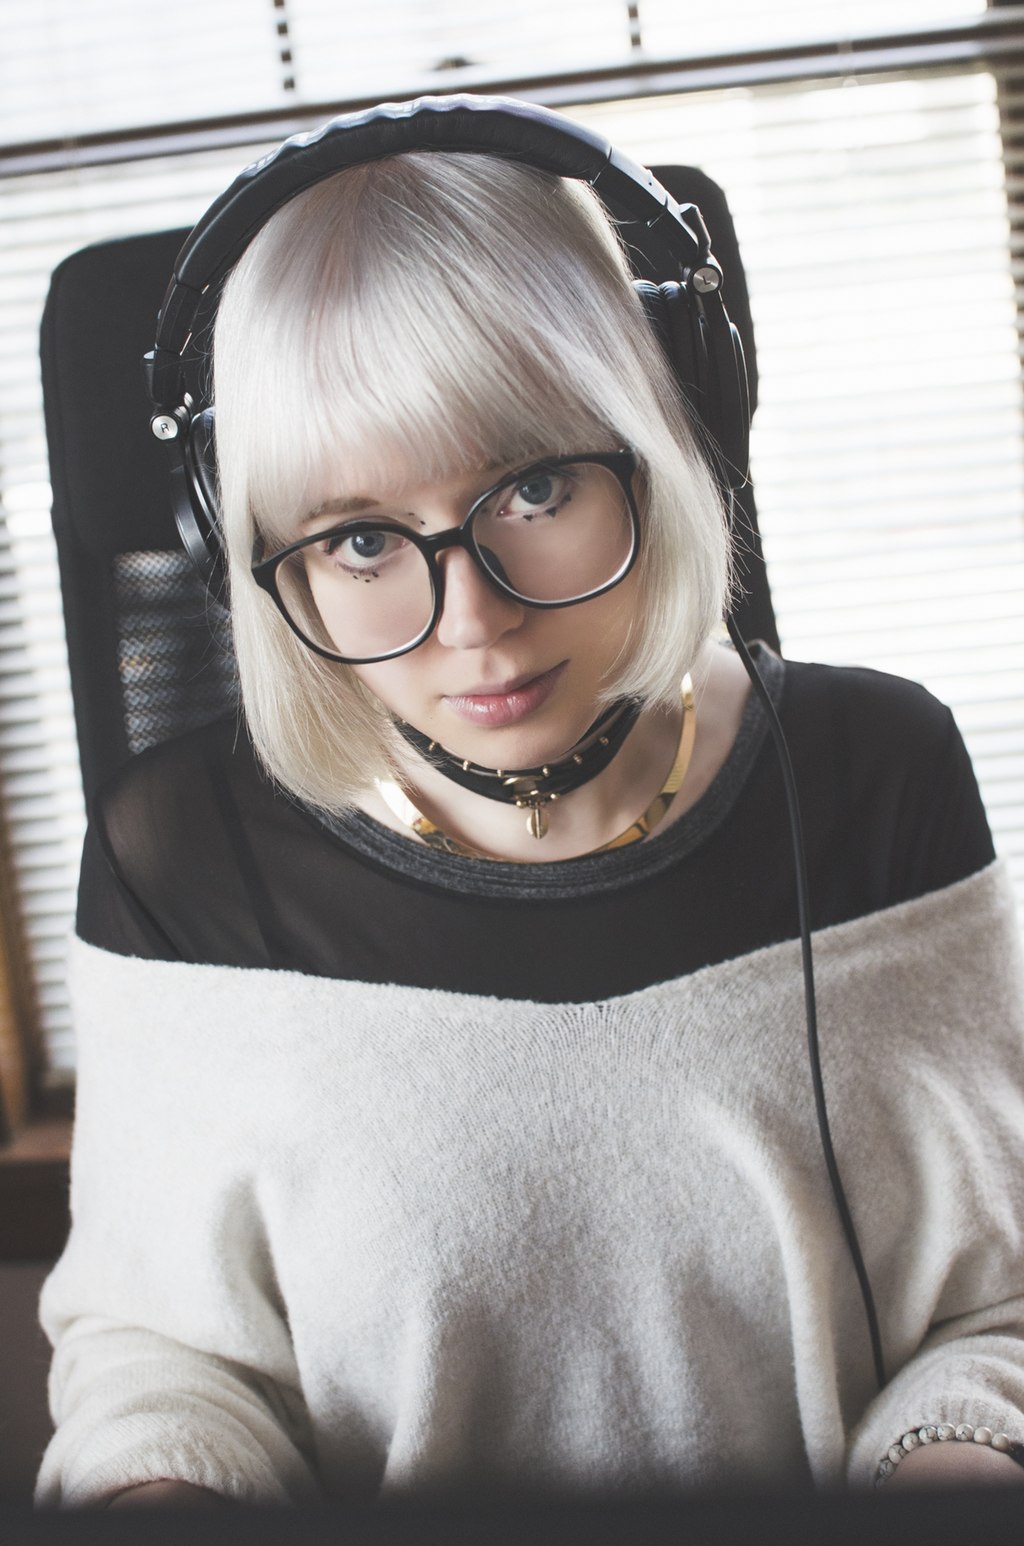 Lena Raine, video game music composer